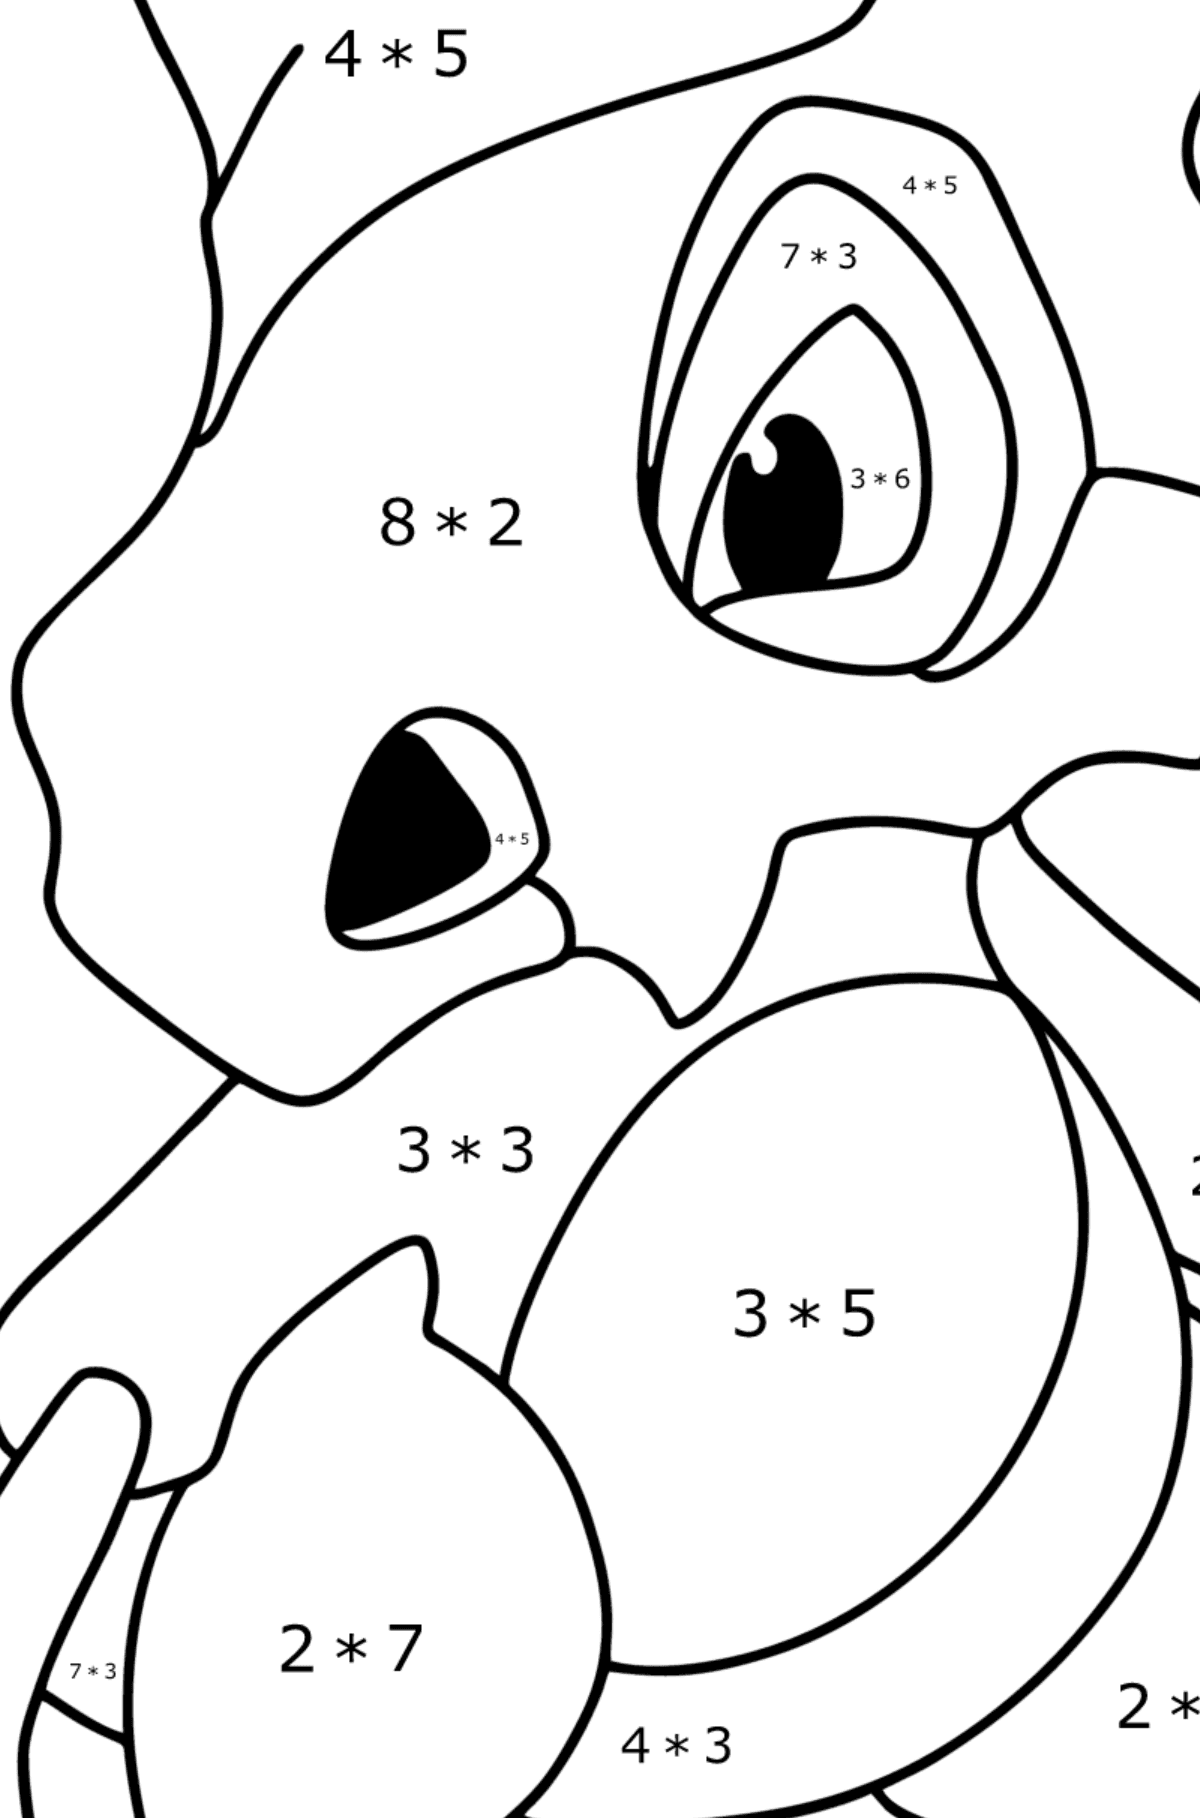 Mewarnai gambar Pokémon Go Cubone - Pewarnaan Matematika: Penjumlahan untuk anak-anak